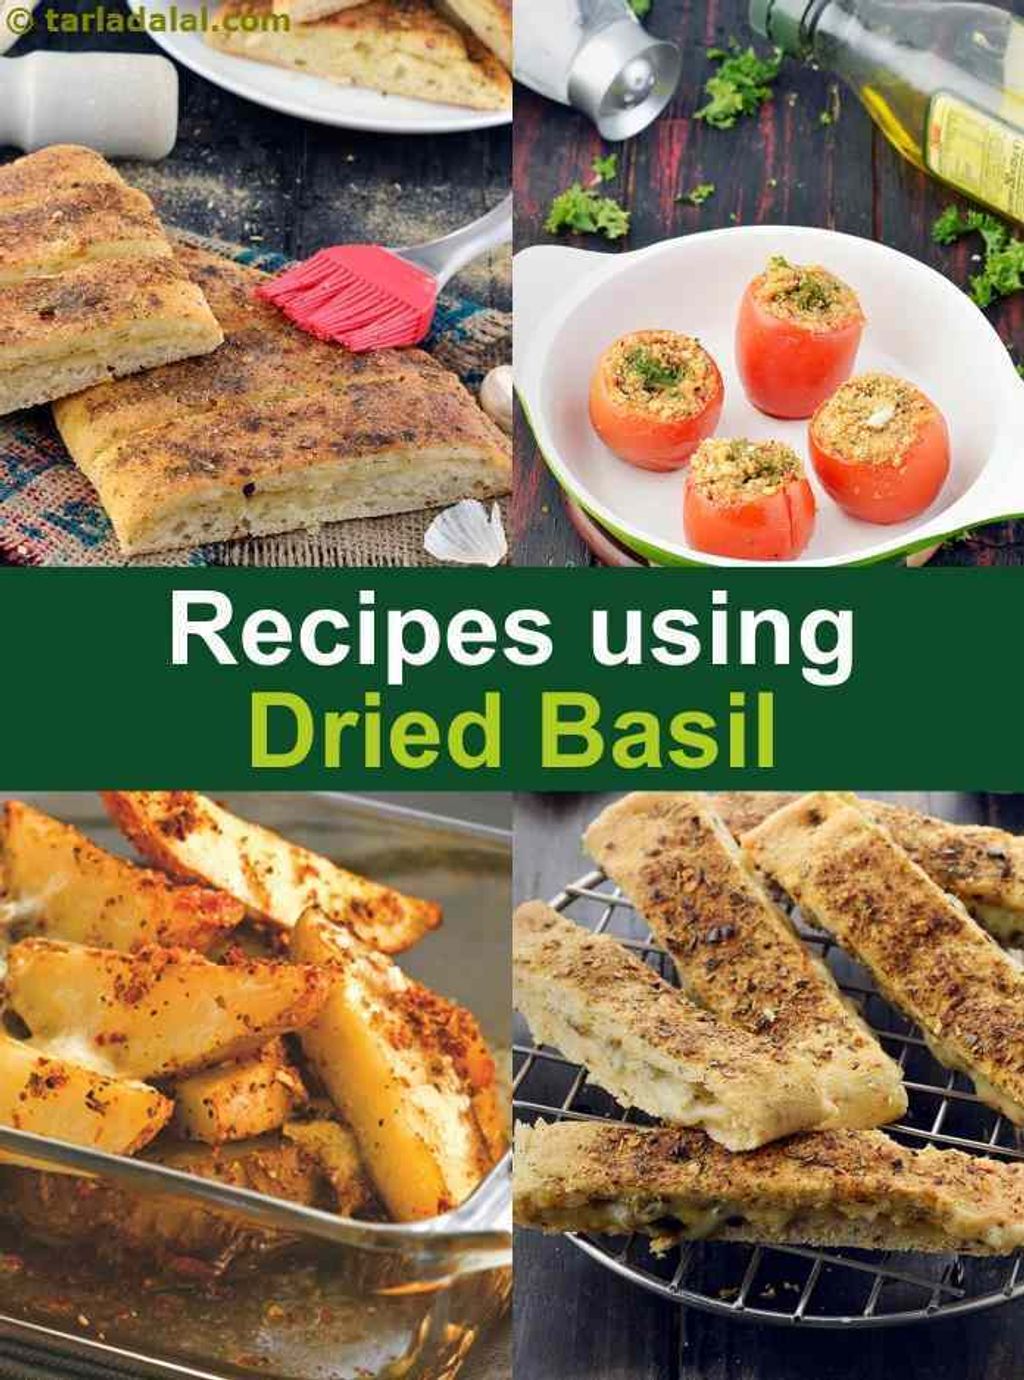 Recipes using Dried Basil.jpg